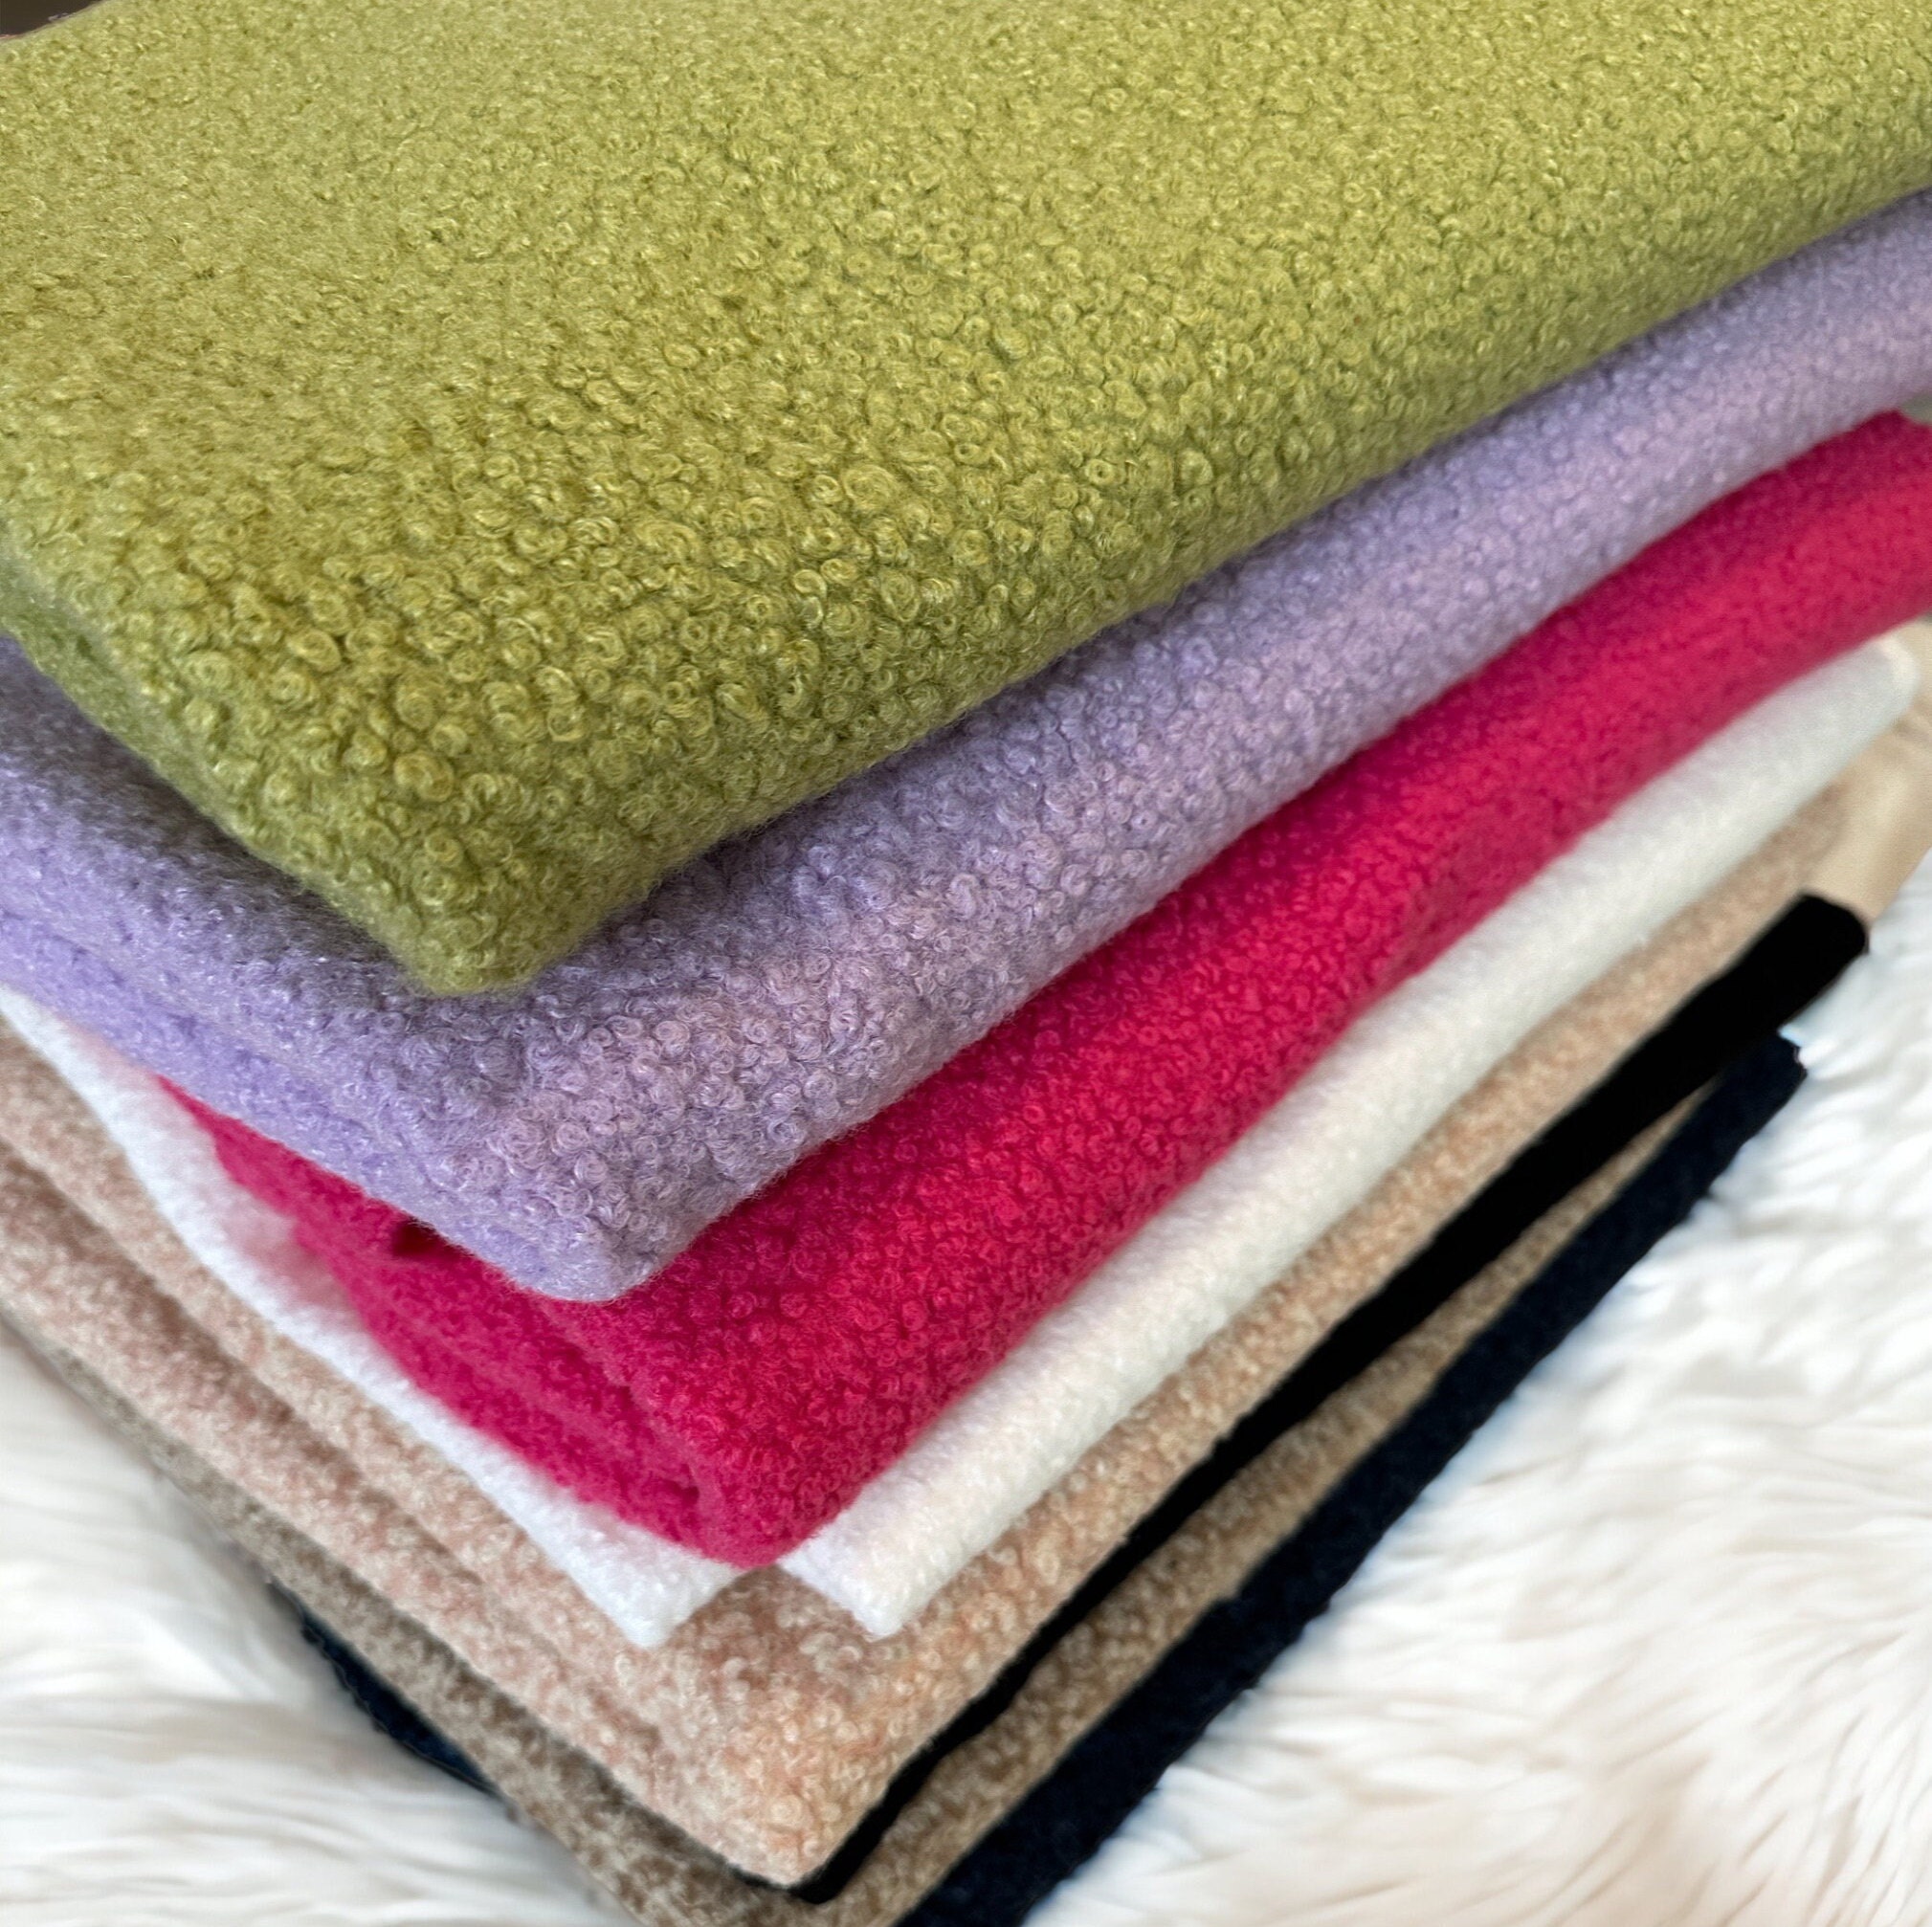 Stretch Wool-wool Stretch-wool Stretch Fabric-suiting Fabric-wool